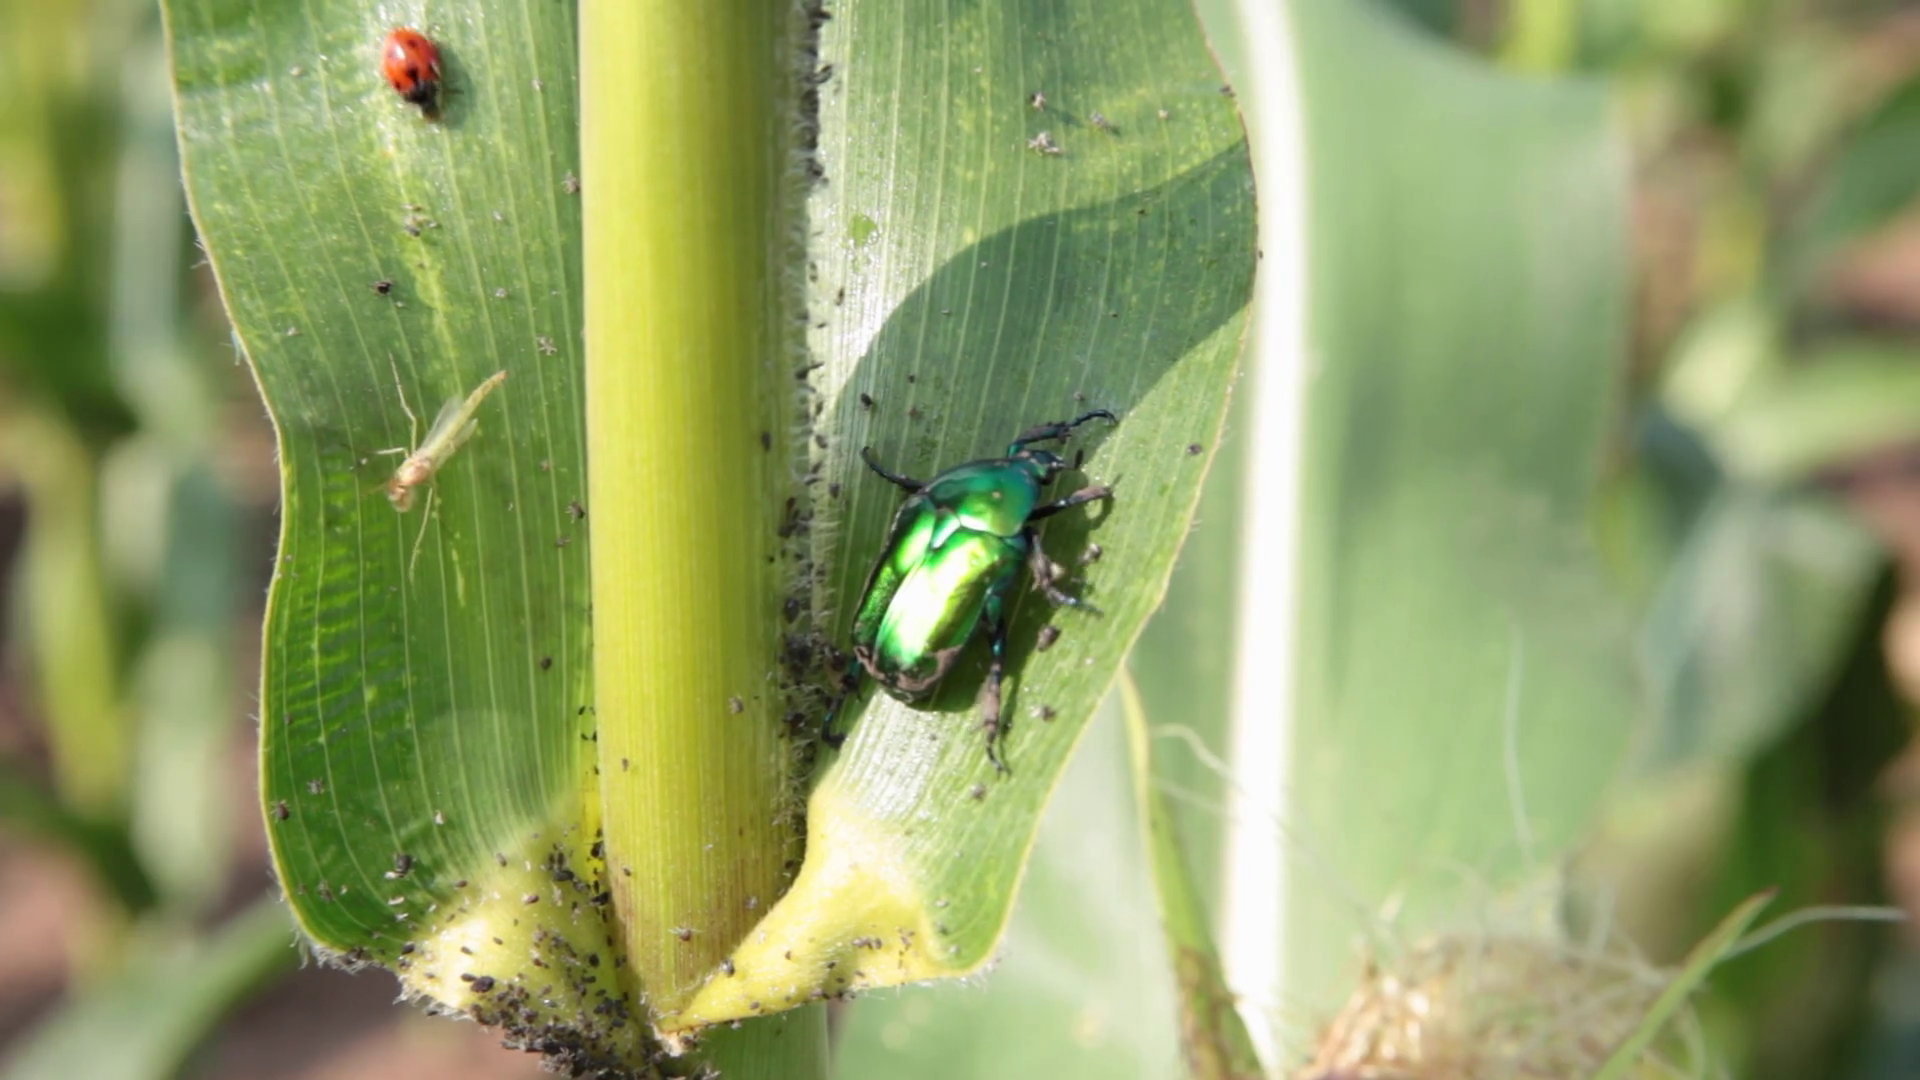 Ladybug scarab Cetonia aurata pests bugs in corn field on damaged ...